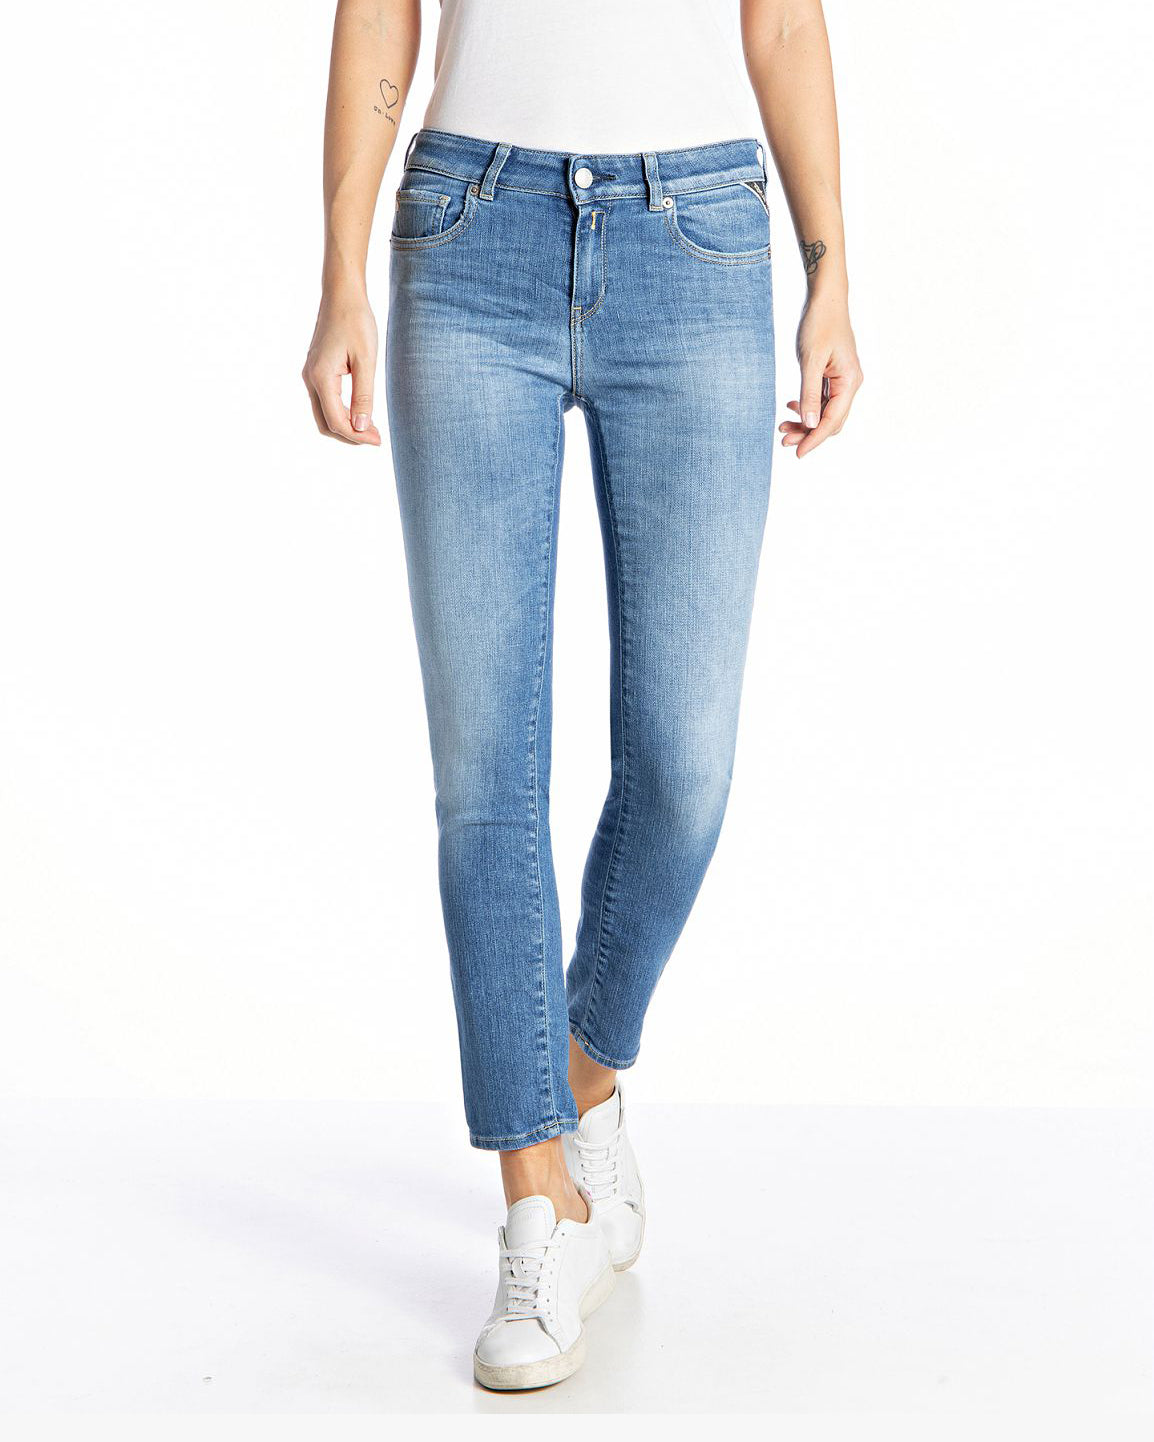 【import】hem zip skinny white jeans W30